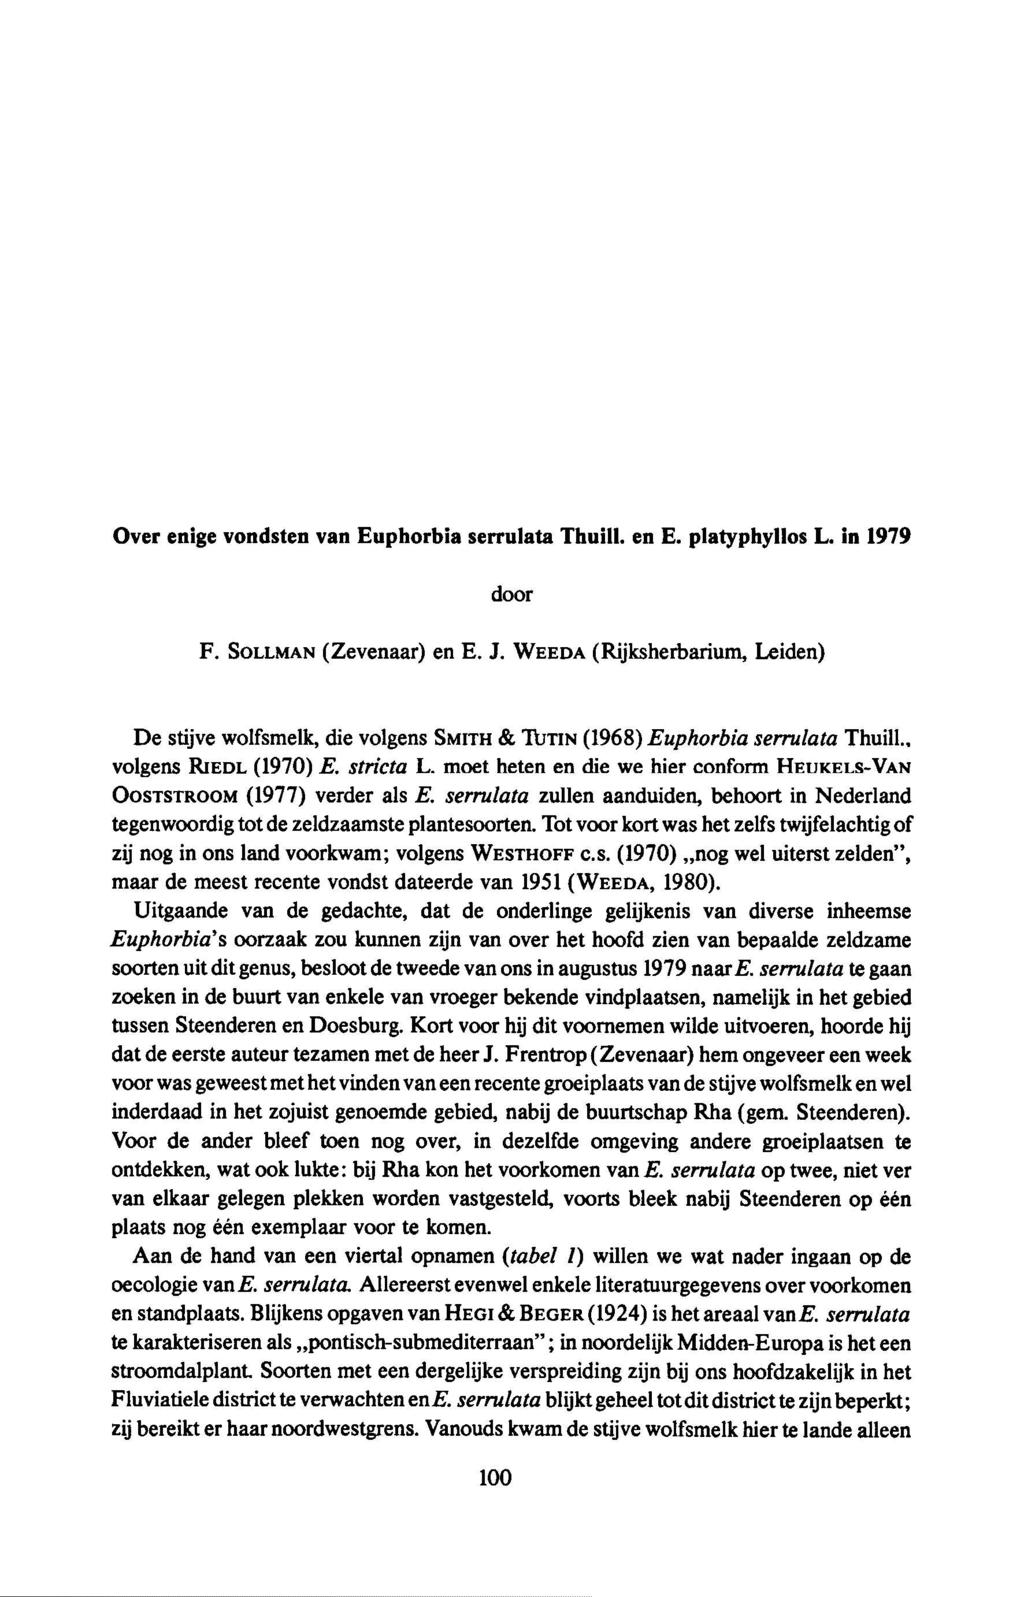 Ove enige vondsten van Euphobia seulata Thuill. en E. platyphyllos L. in 1979 doo F. Sollman (Zevenaa) en E.J.